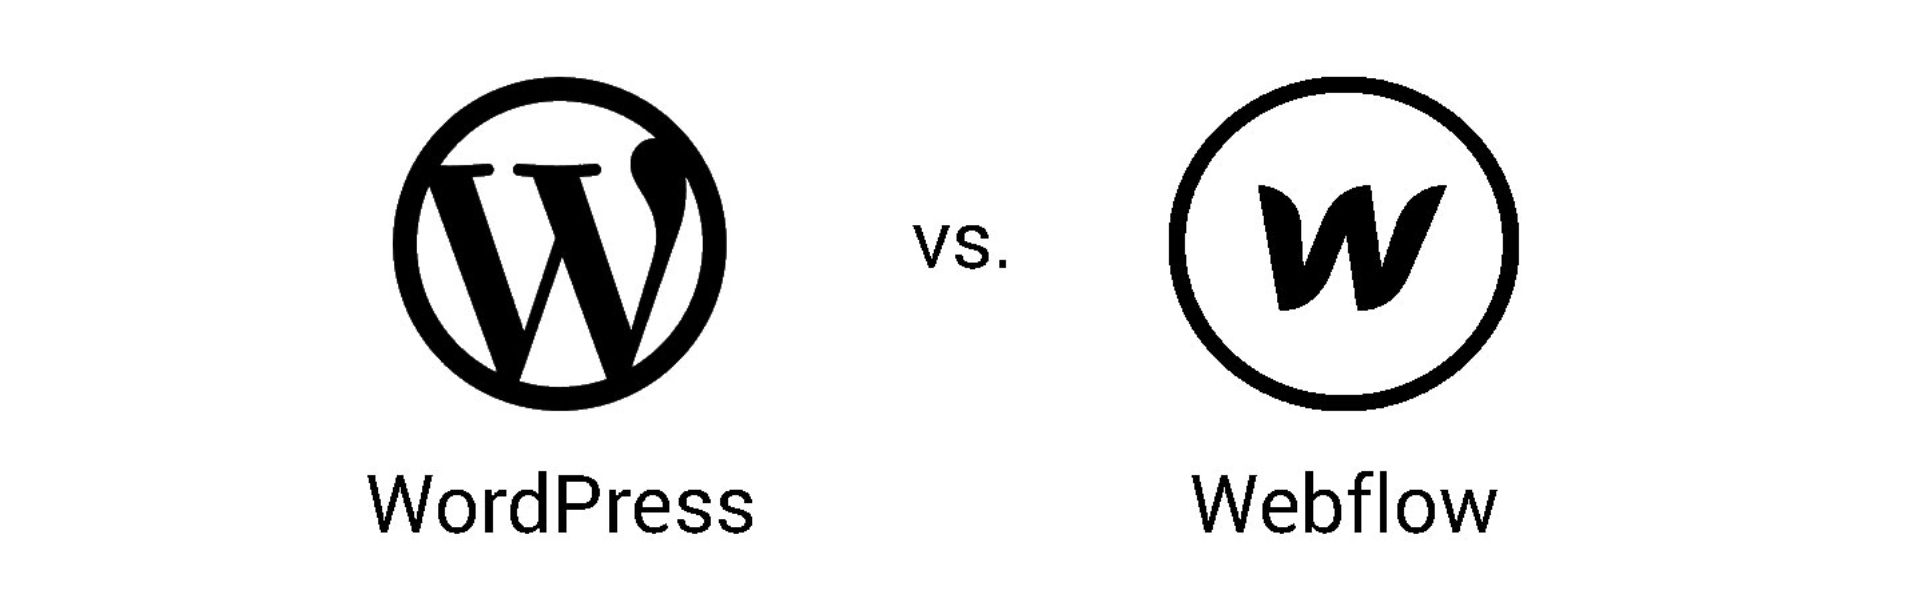 Webflow vs WordPress: The Ultimate Showdown Between Two Website Builders